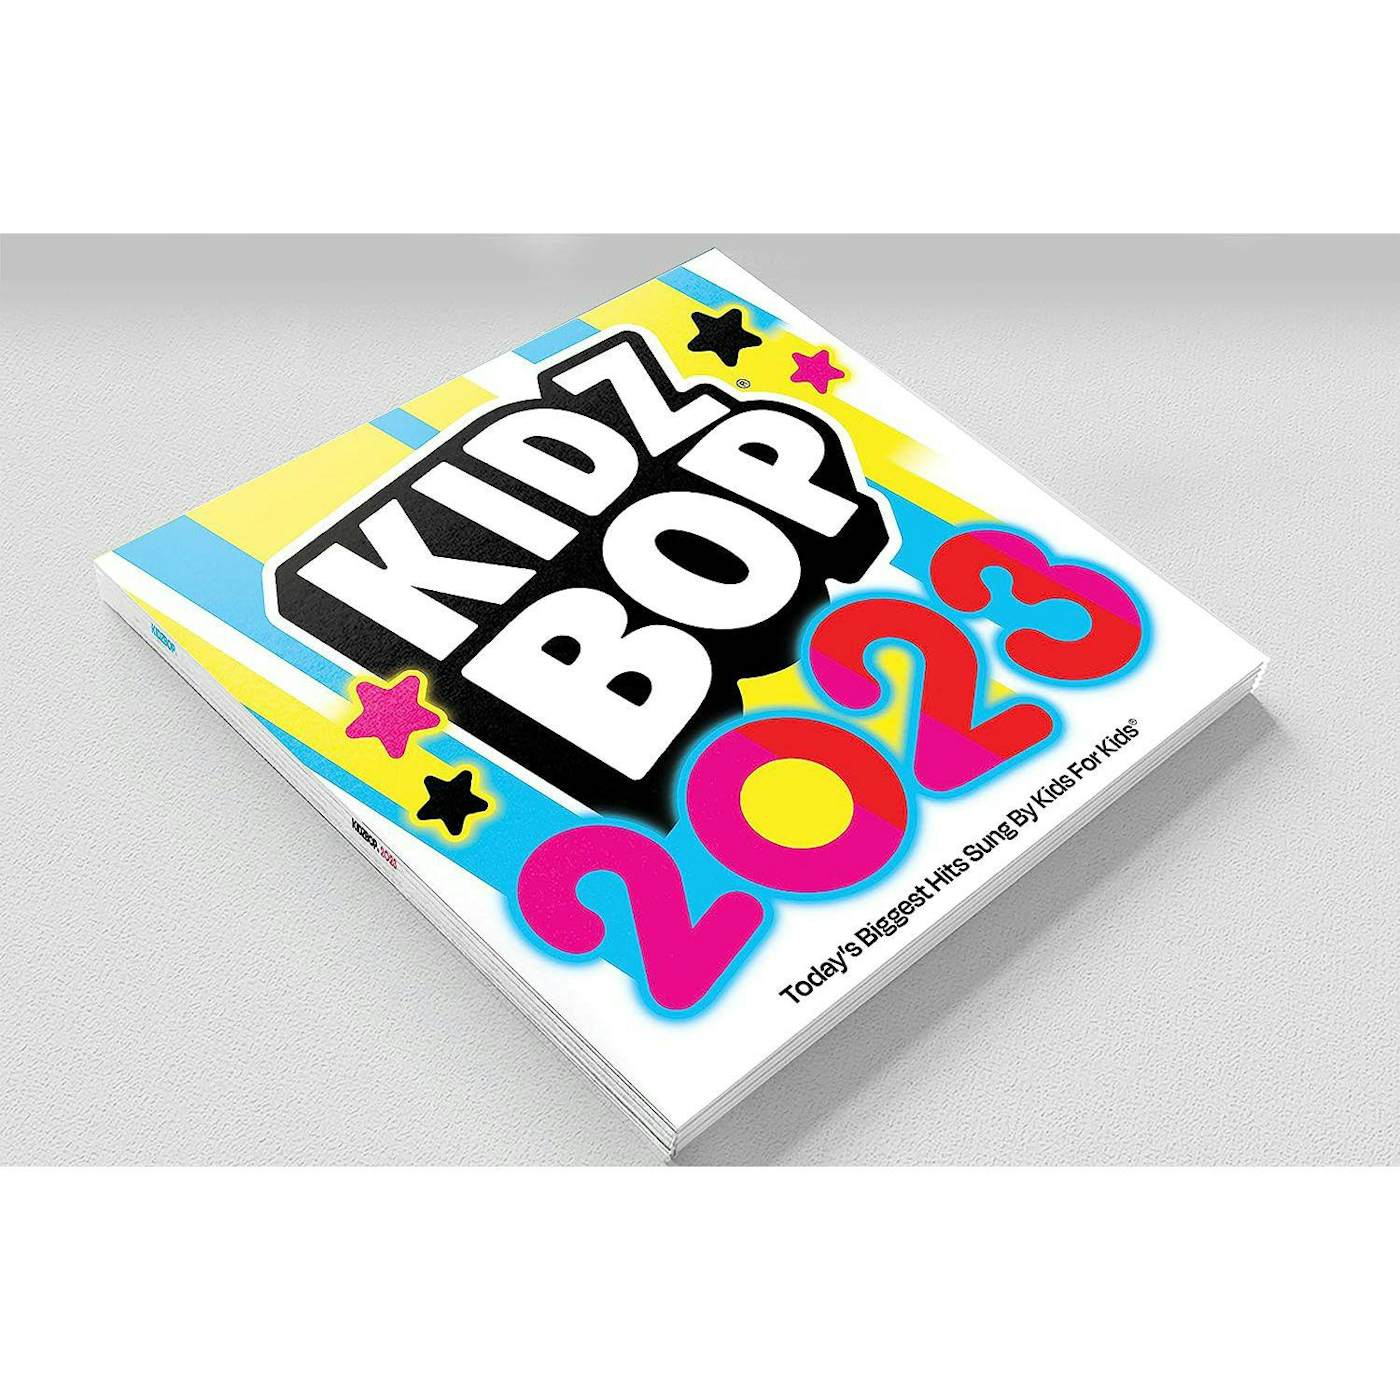 Kidz Bop 2023 (Electric Blue) Vinyl Record